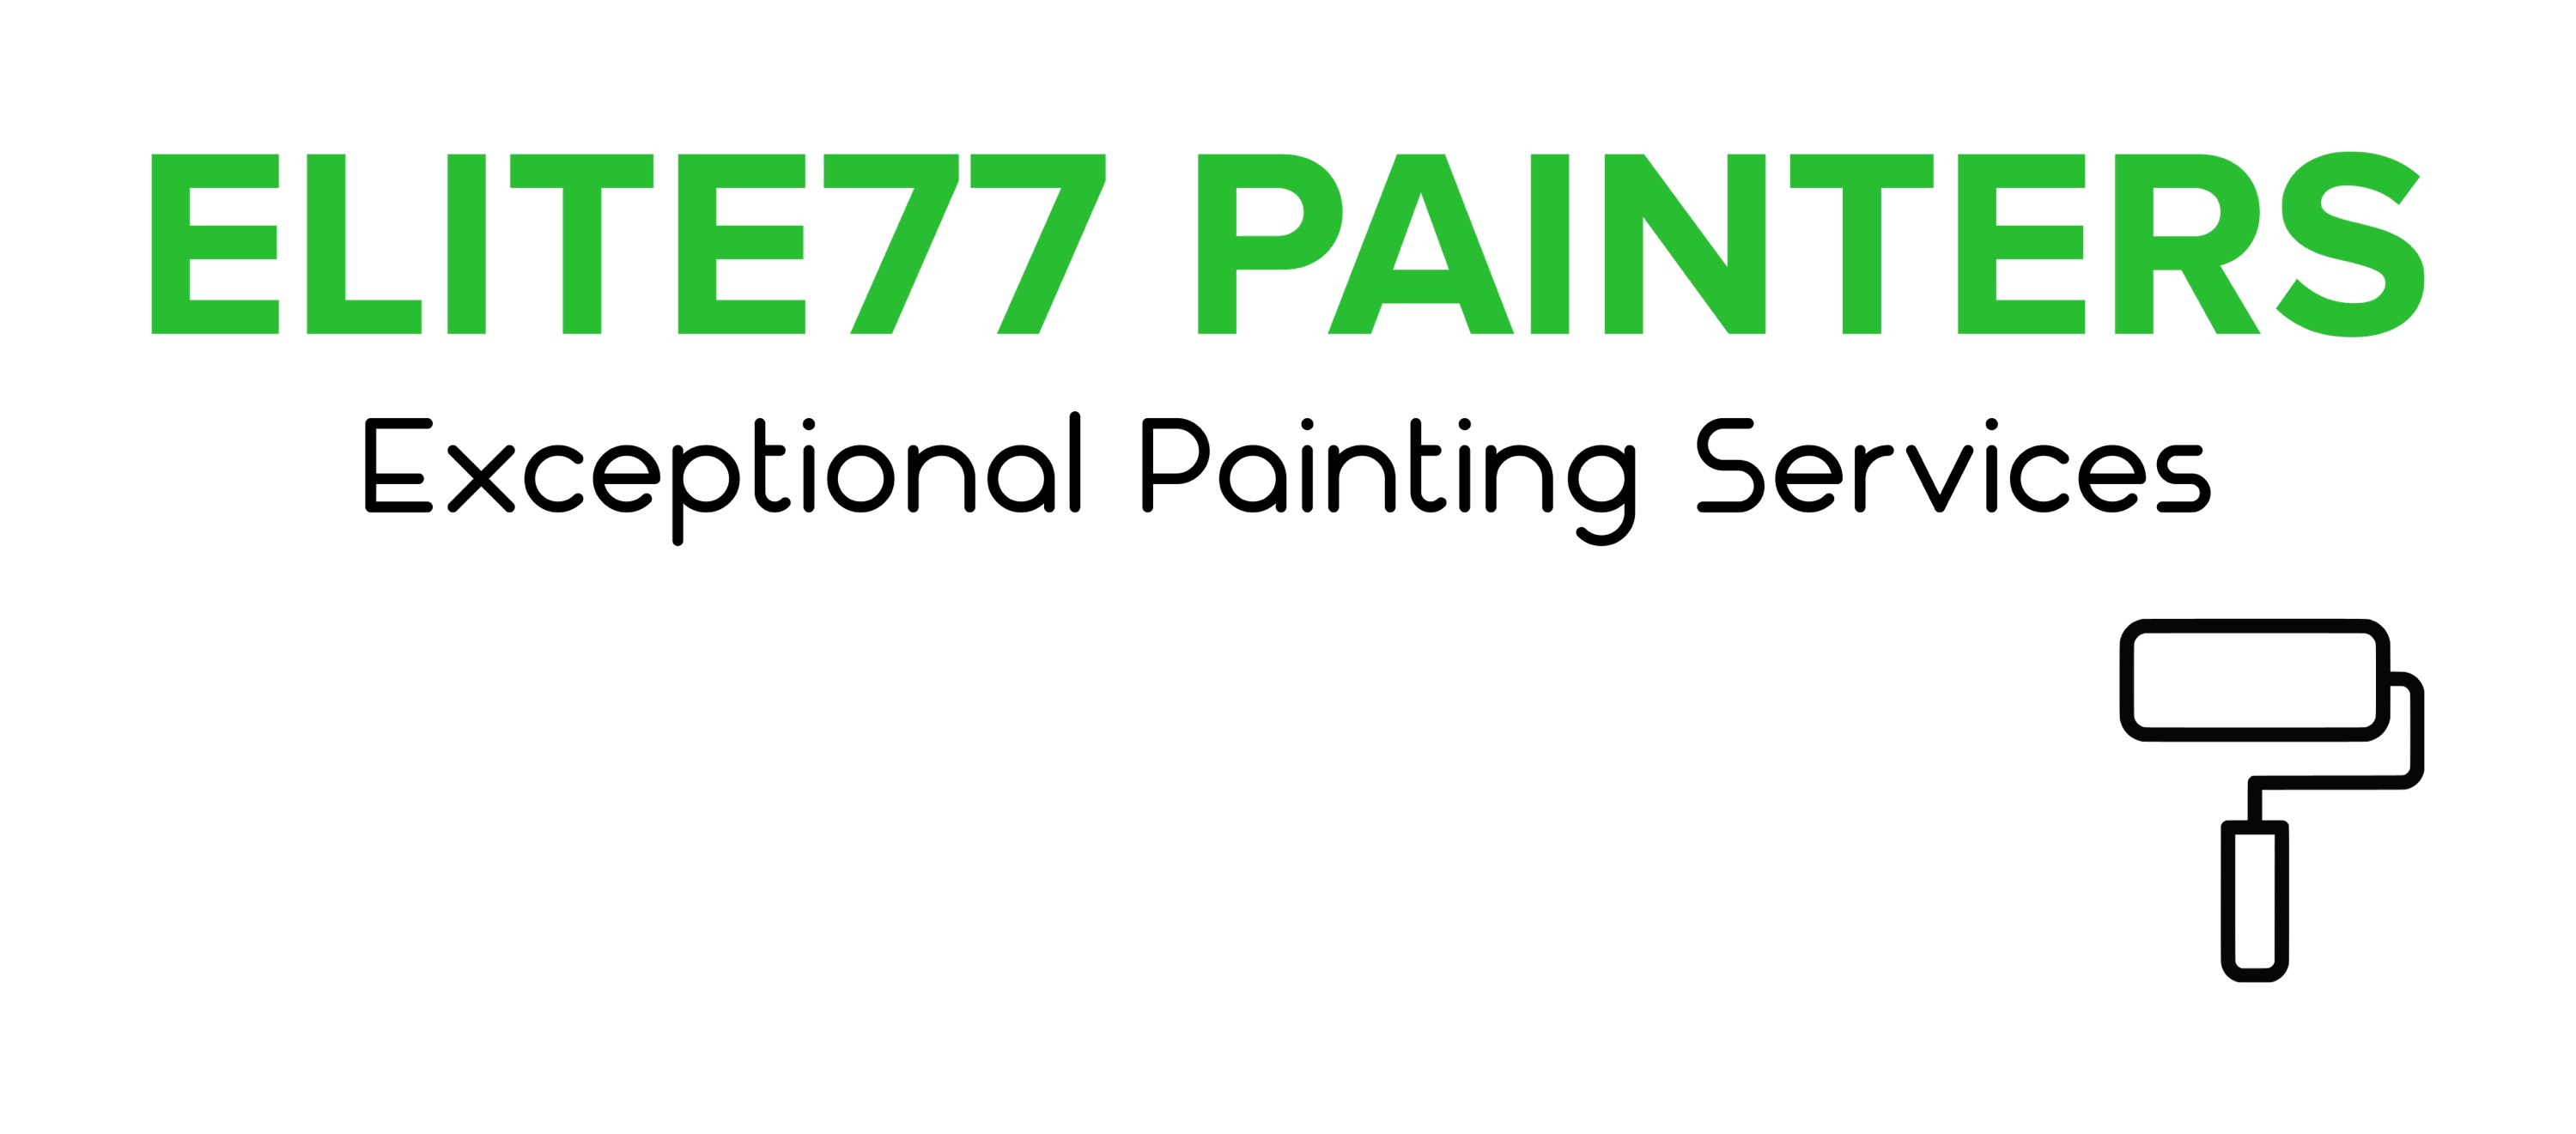 Elite77 Painters LLC Logo